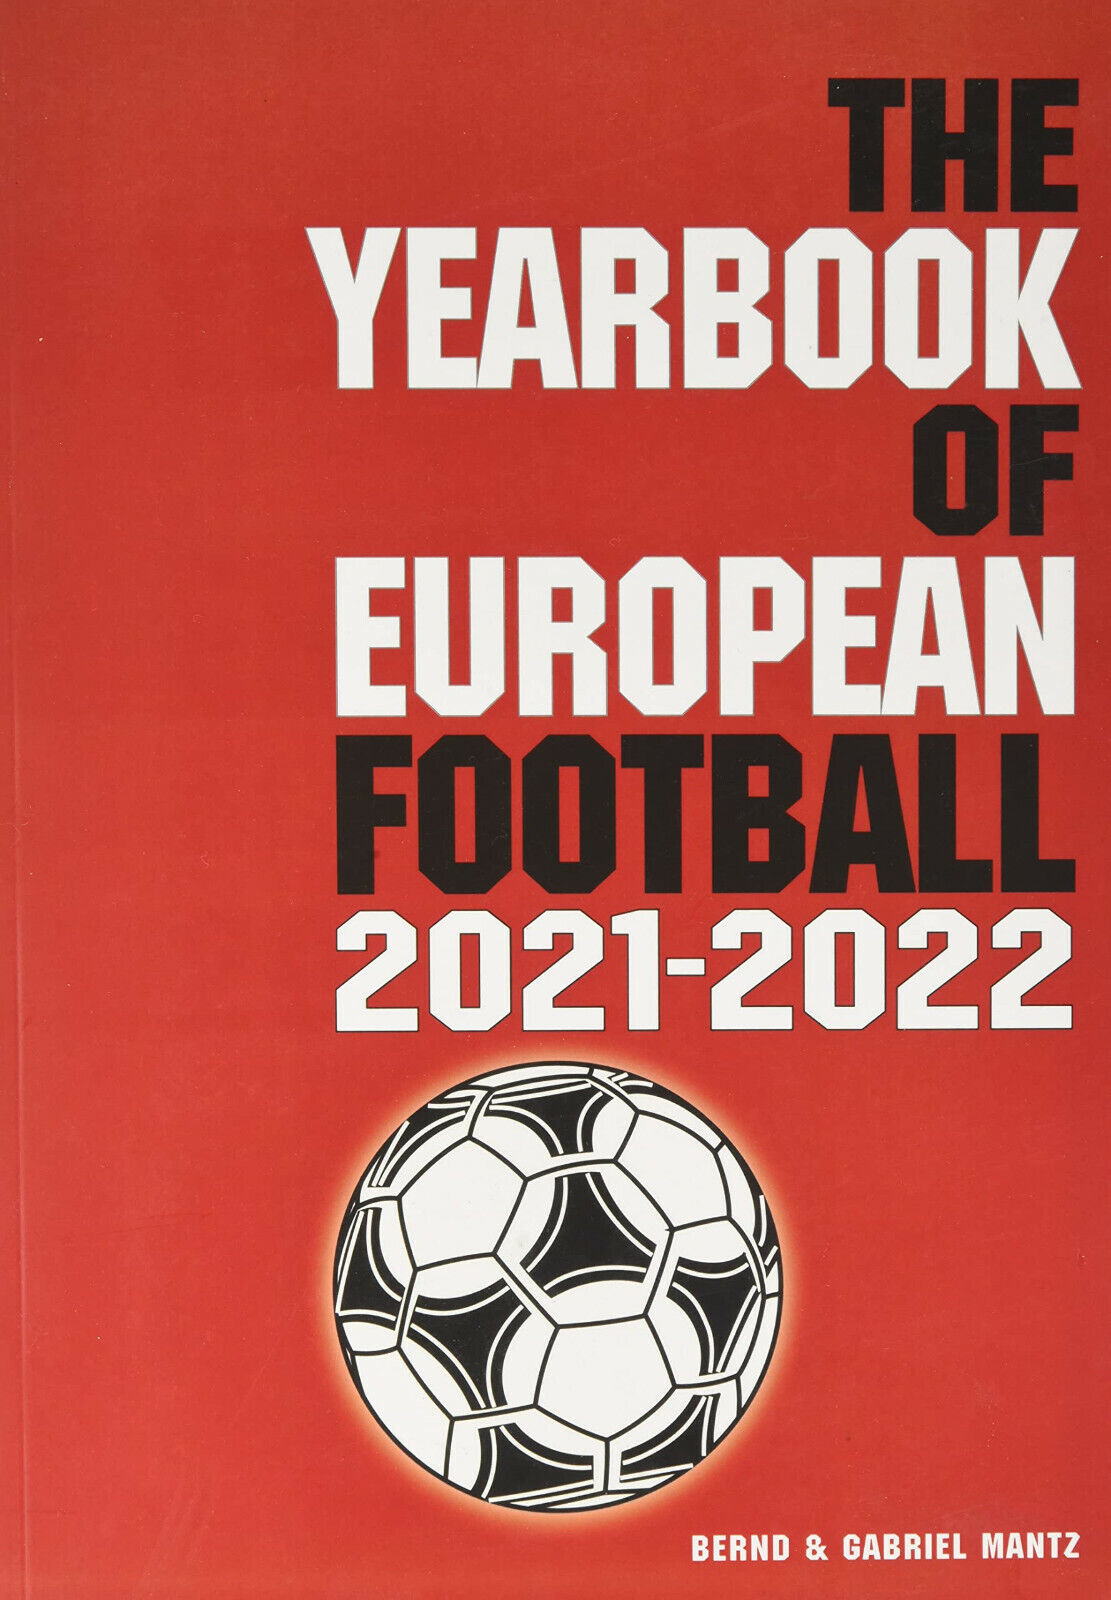 The Yearbook of European Football 2021-2022 - Bernd Mantz - 2021